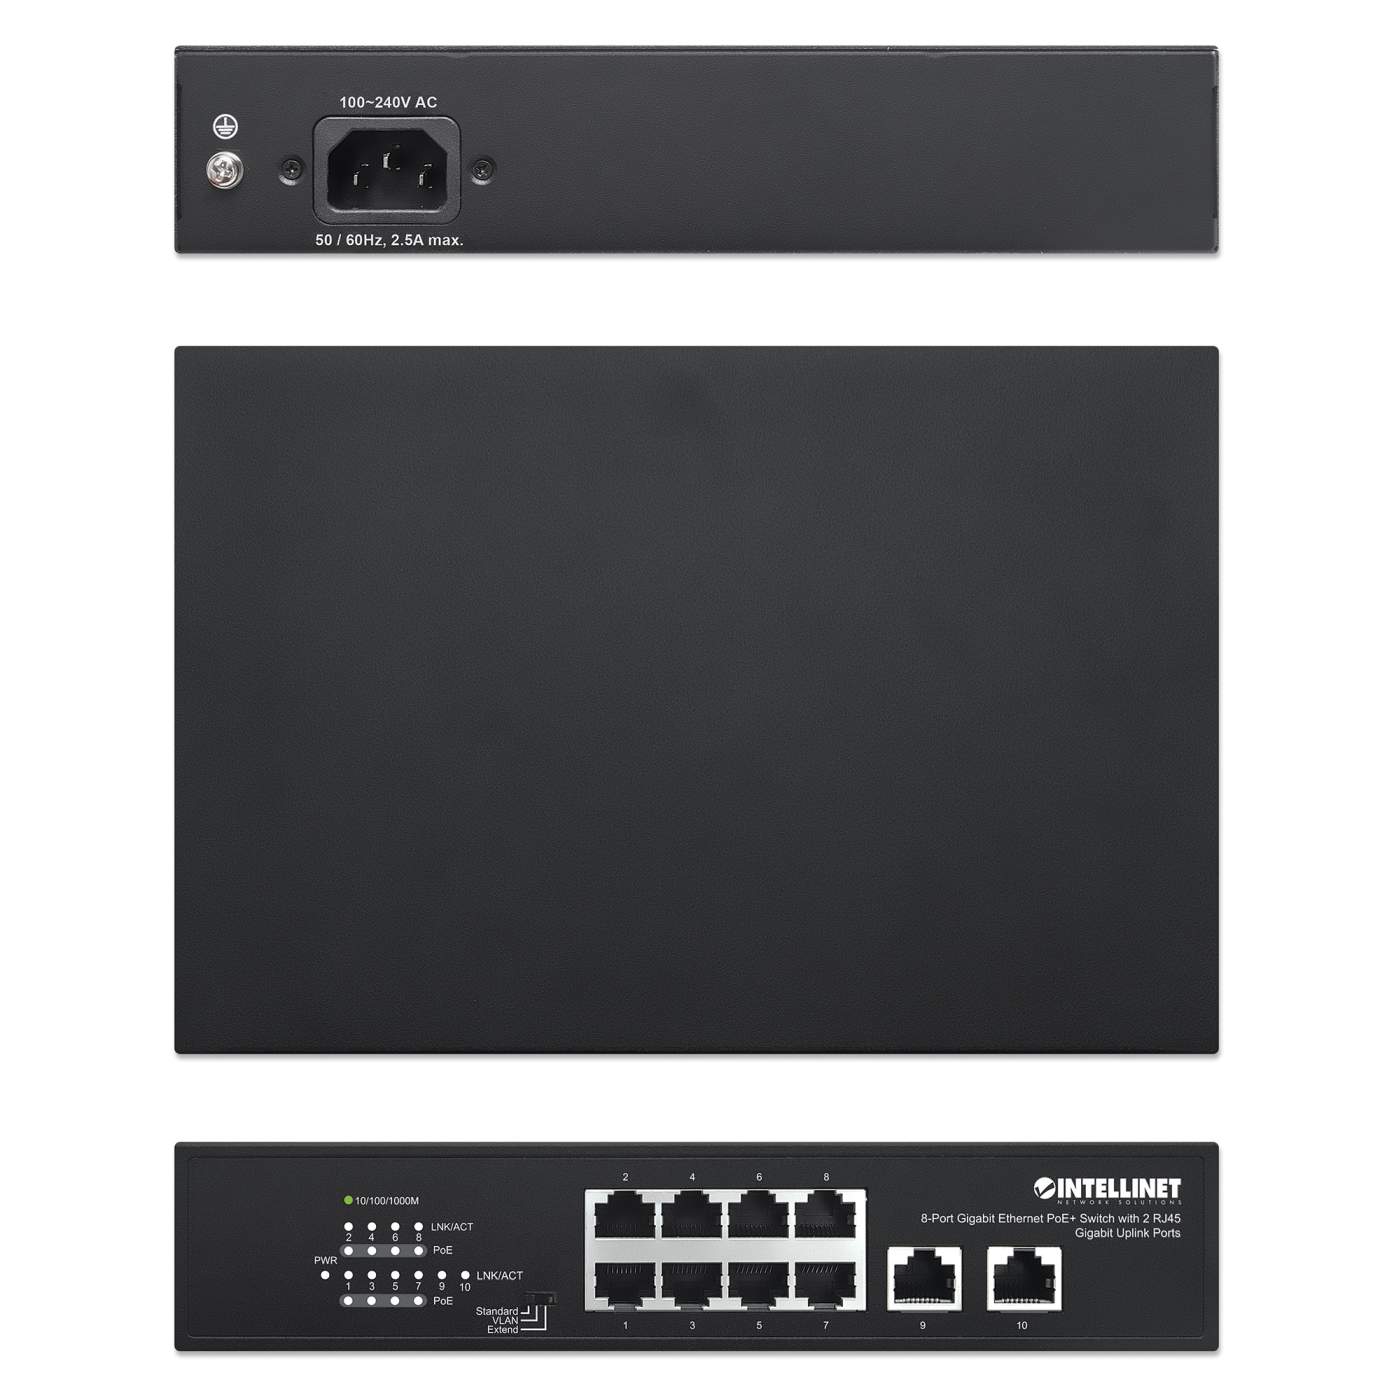 8-Port Gigabit Ethernet PoE+ Switch with 2 RJ45 Gigabit Uplink Ports Image 6